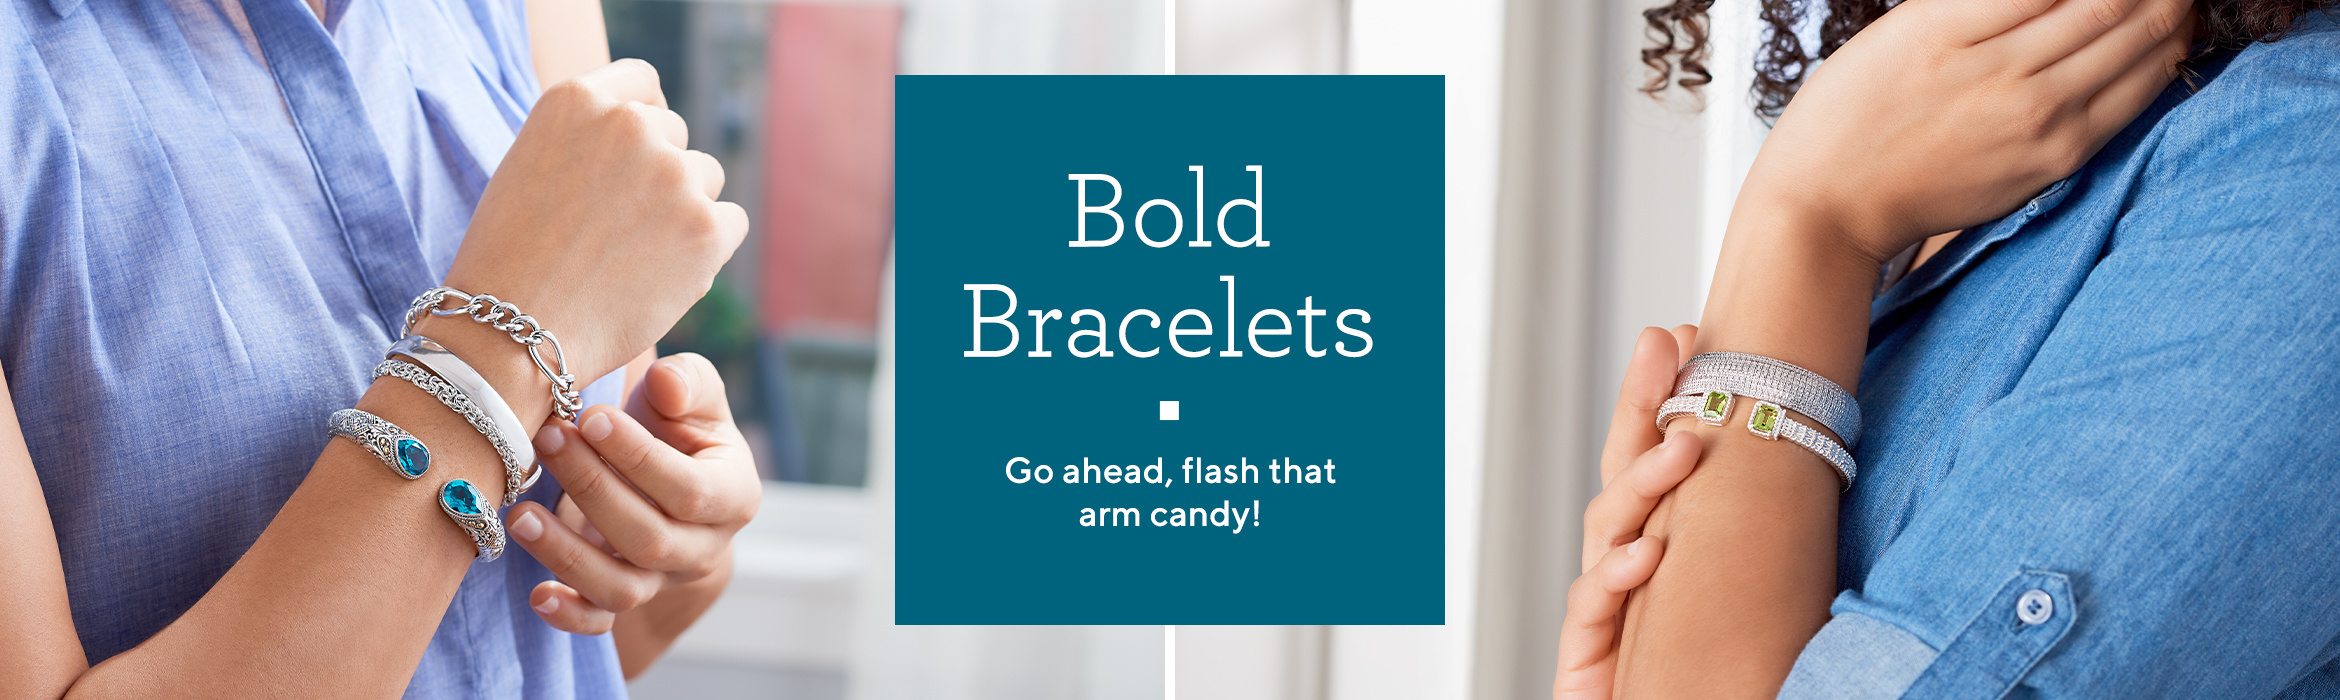 Bold Bracelets  Go ahead, flash that arm candy!